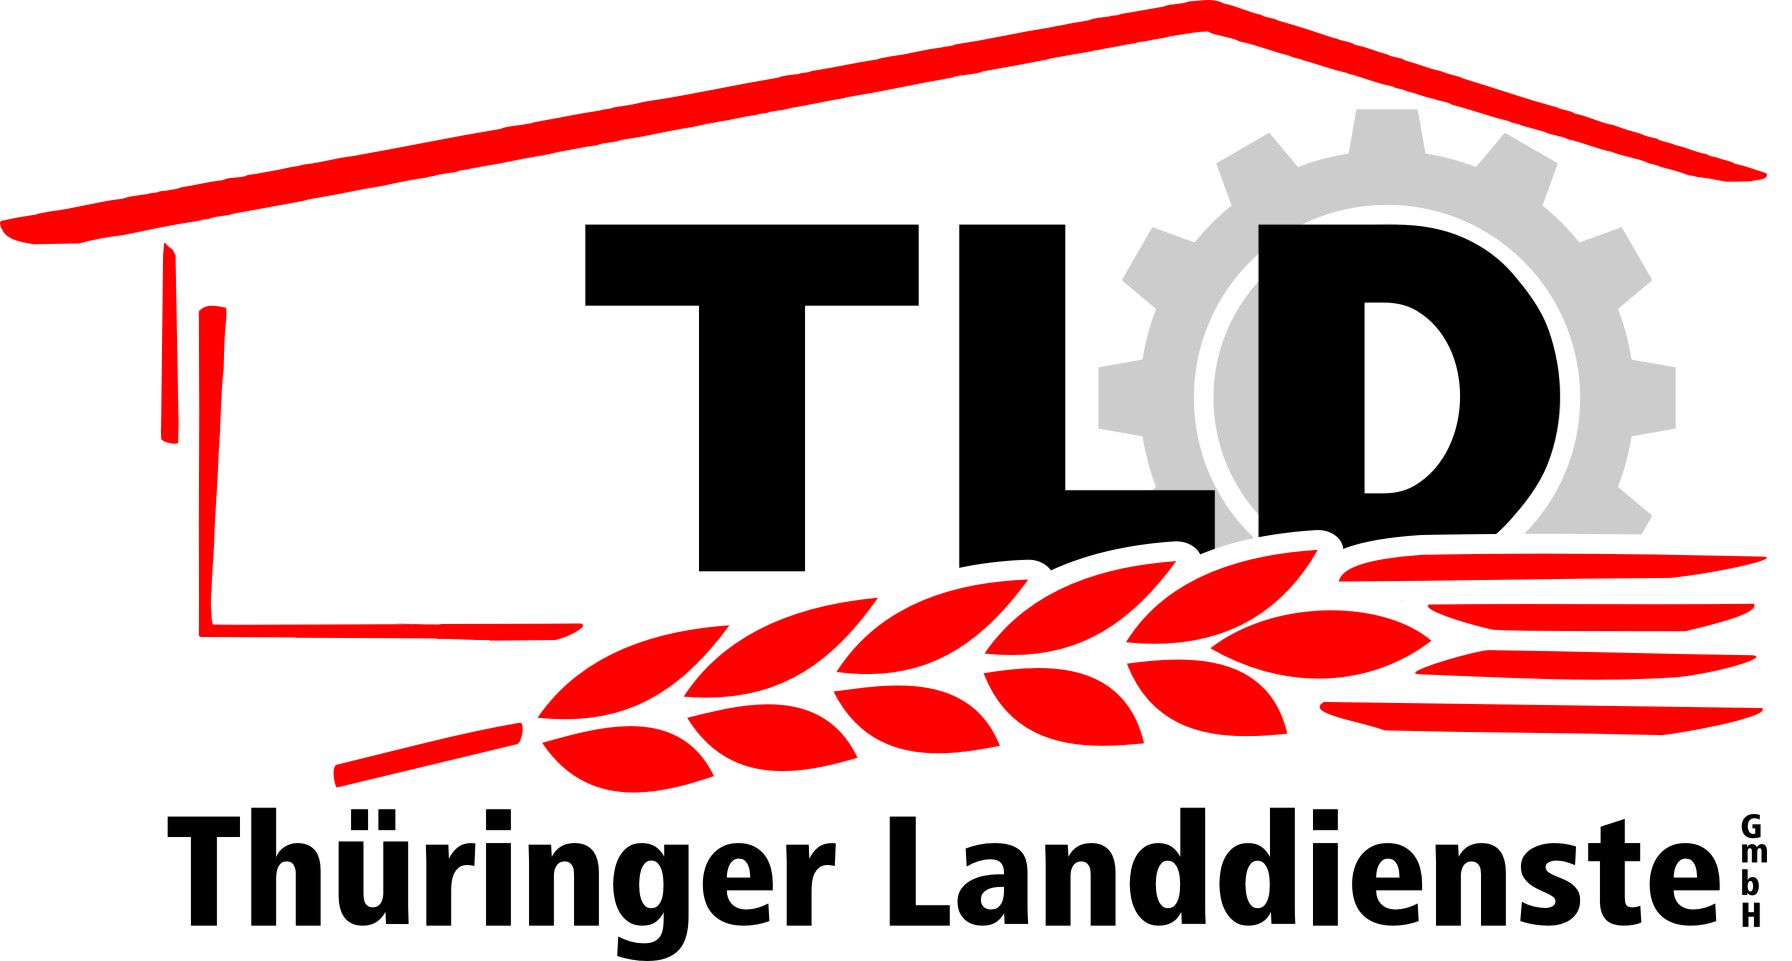 Thüringer Landdienste